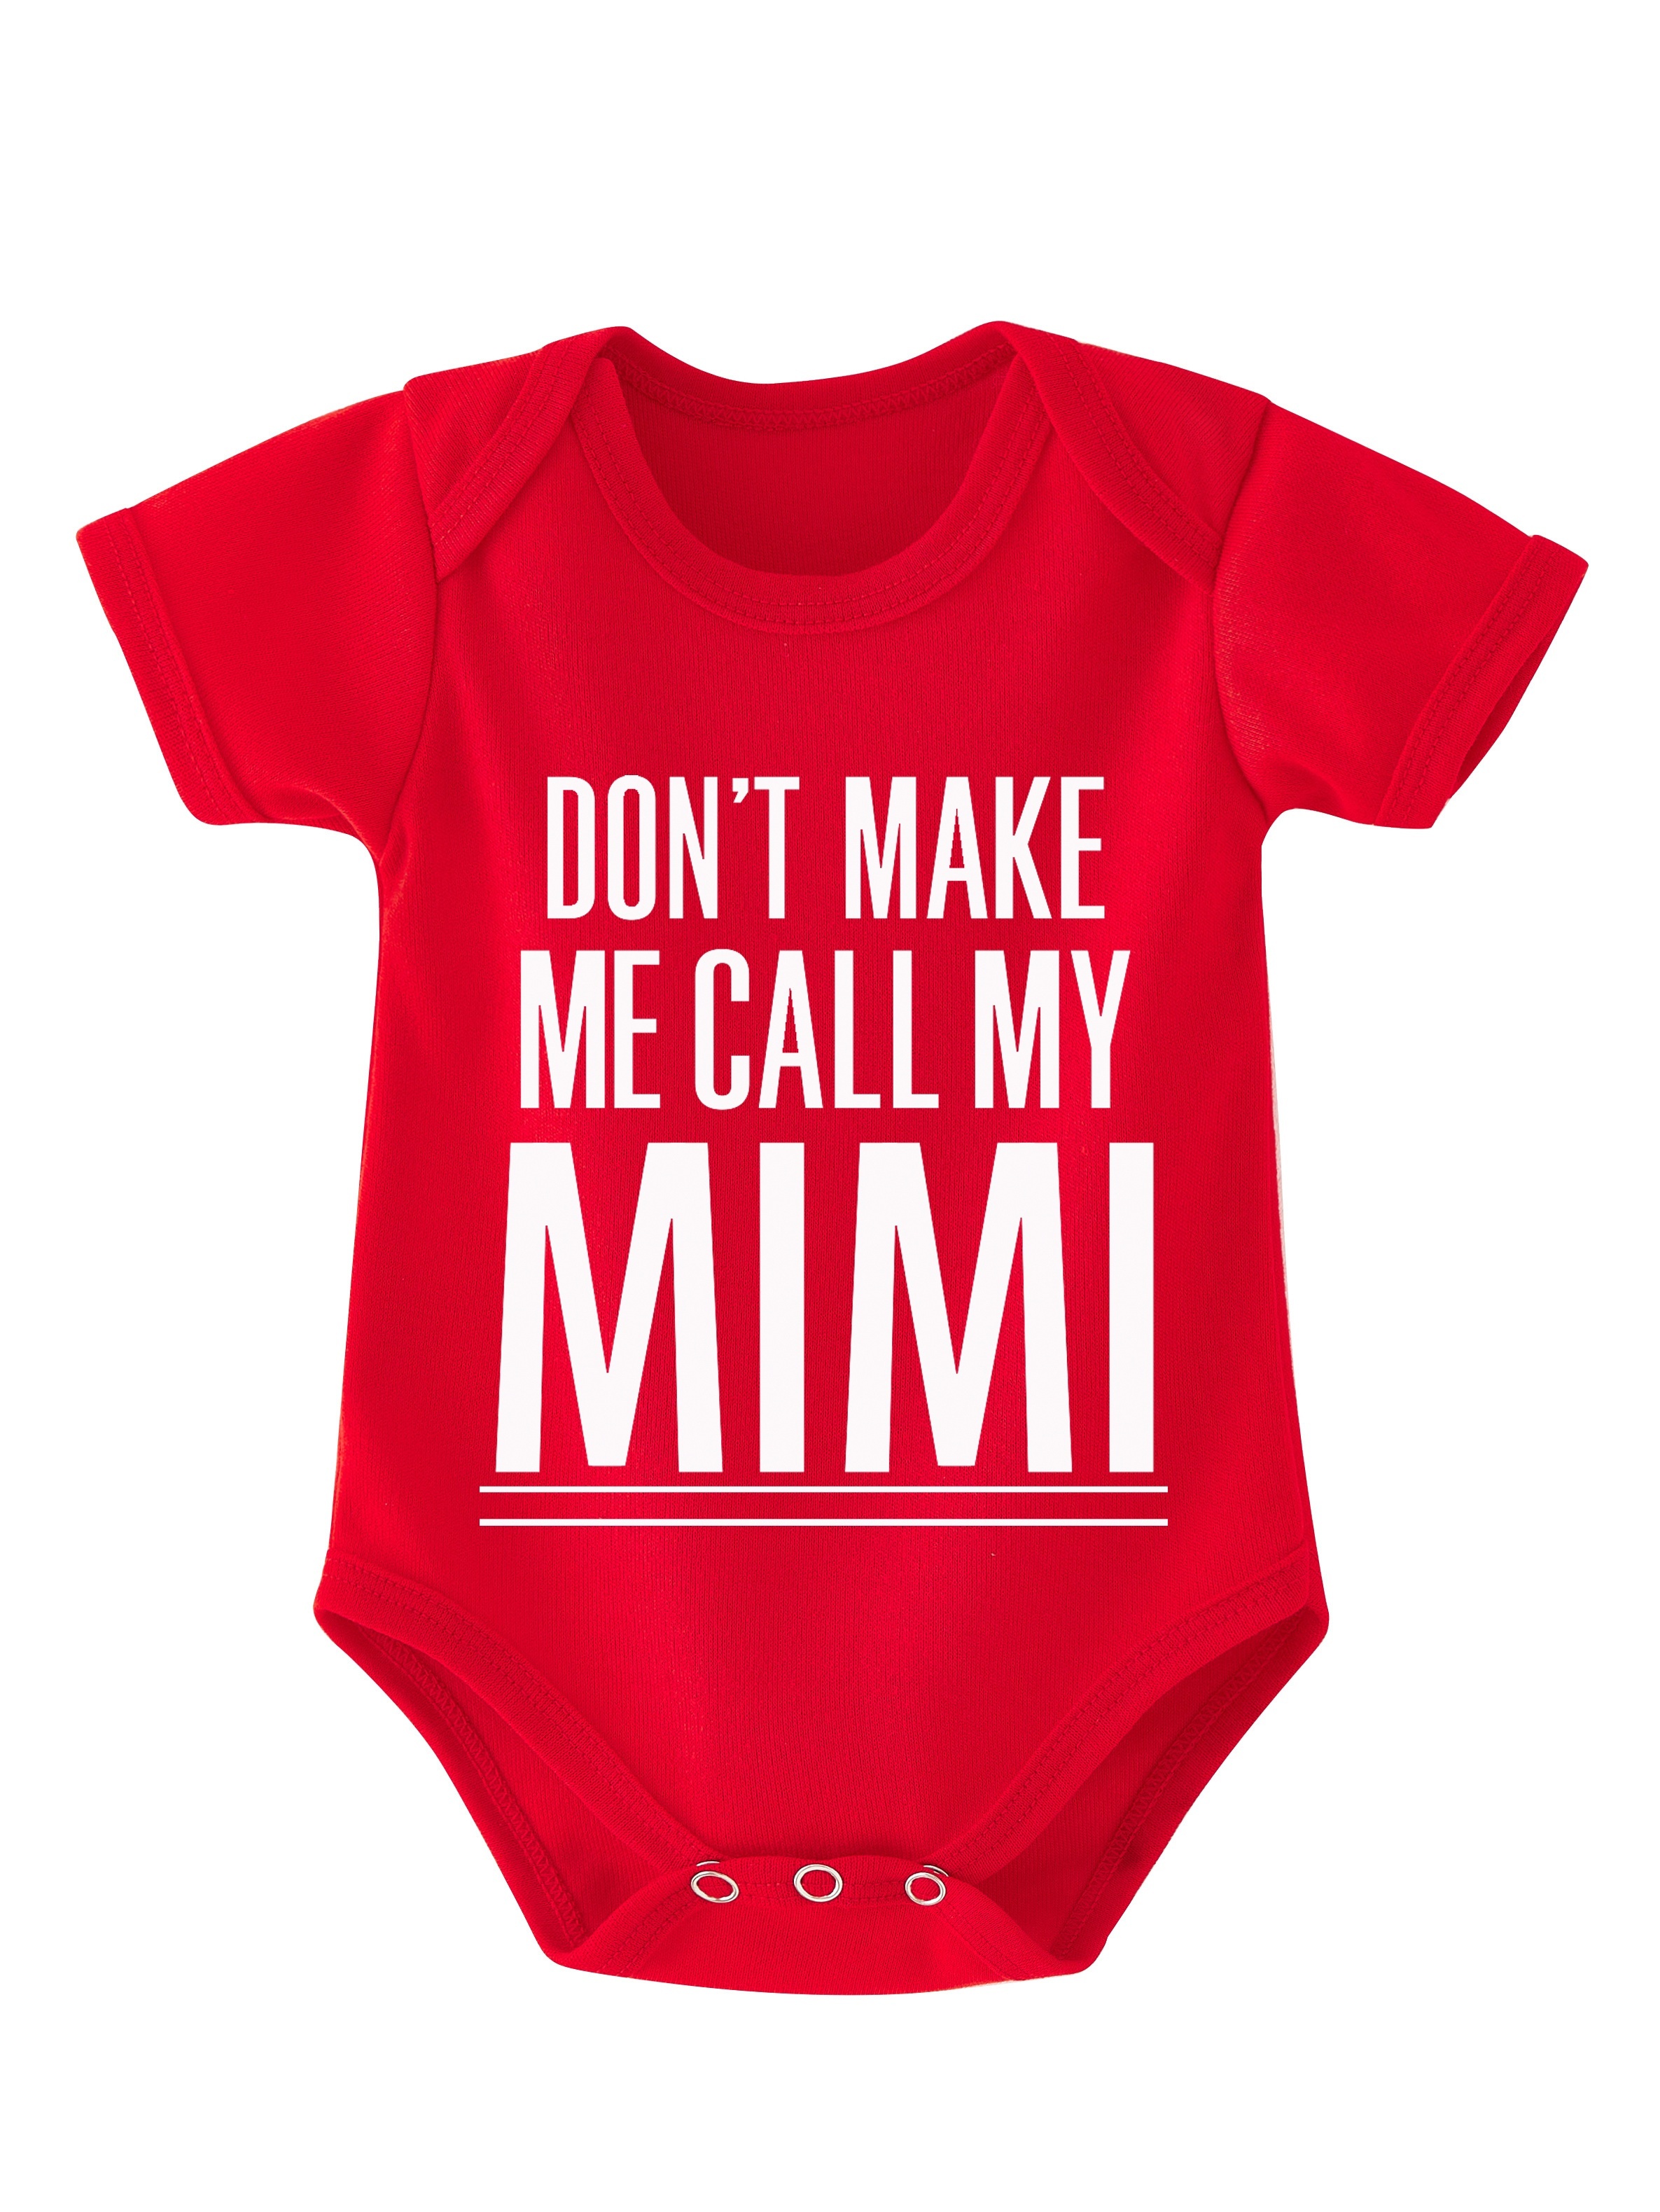 Will You Be My Mimi Onesie ®, Baby Announcement Onesie